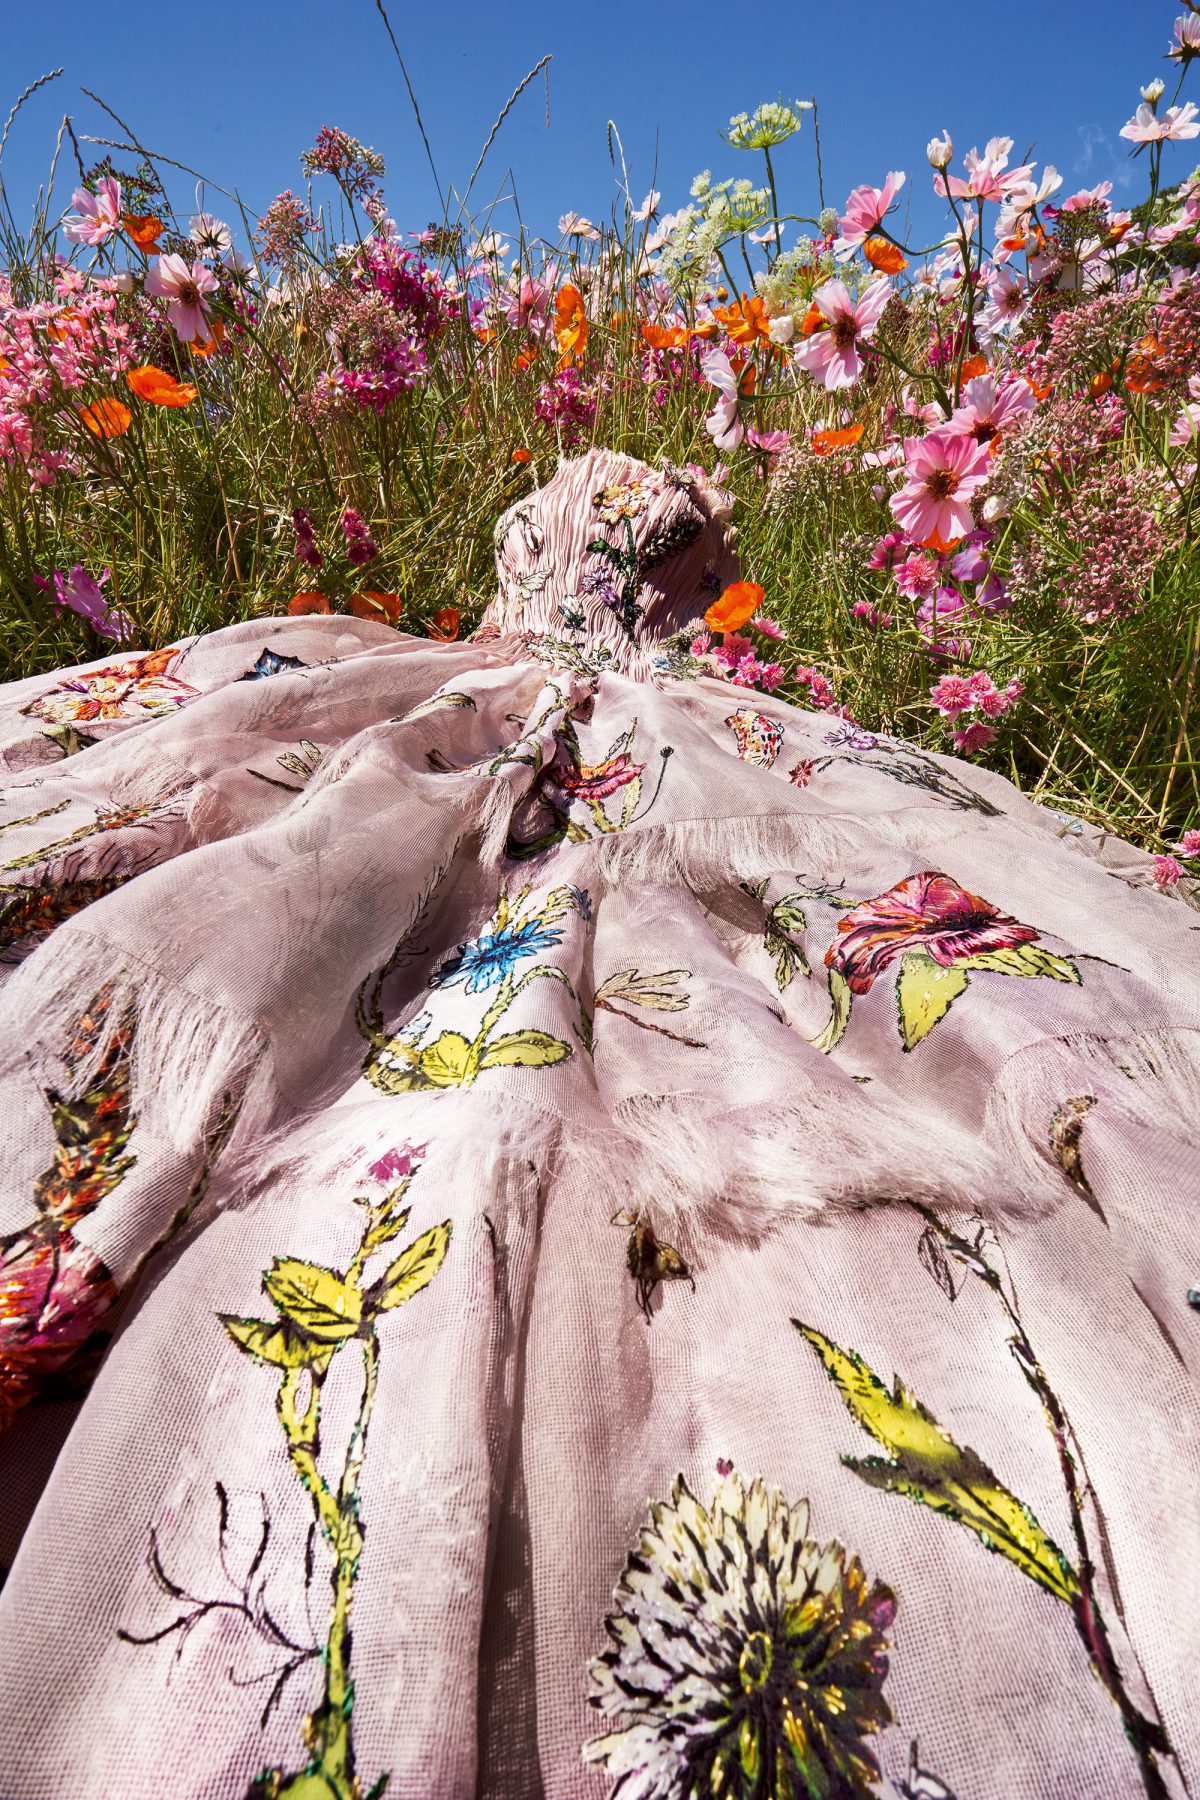 Miss Dior Blooming Bouquet Perfume Ad Natalie Portman 2023